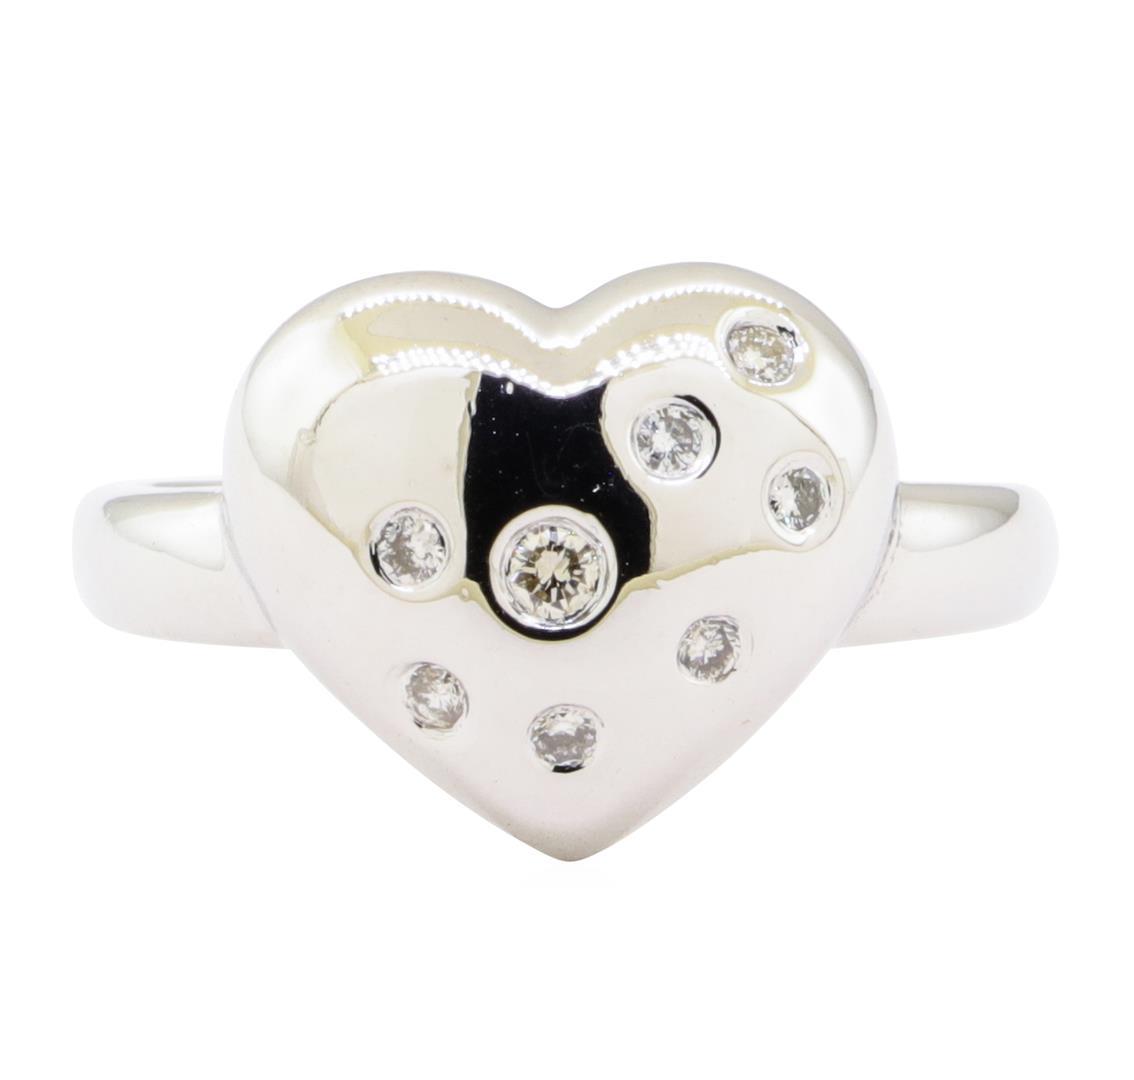 0.20 ctw Diamond Heart Shaped Ring - 14KT White Gold